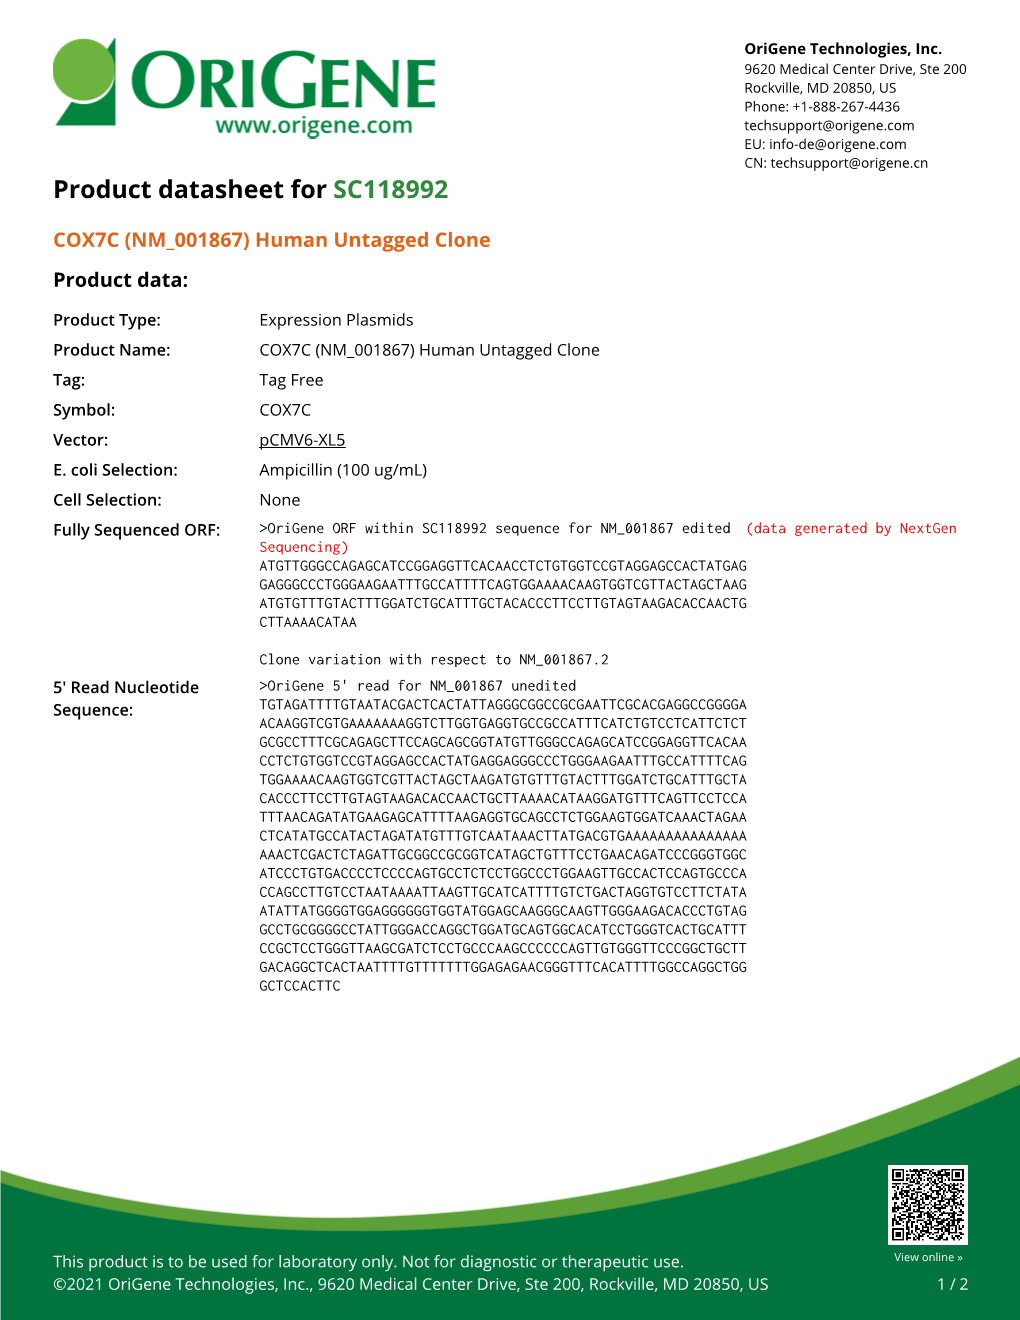 COX7C (NM 001867) Human Untagged Clone Product Data